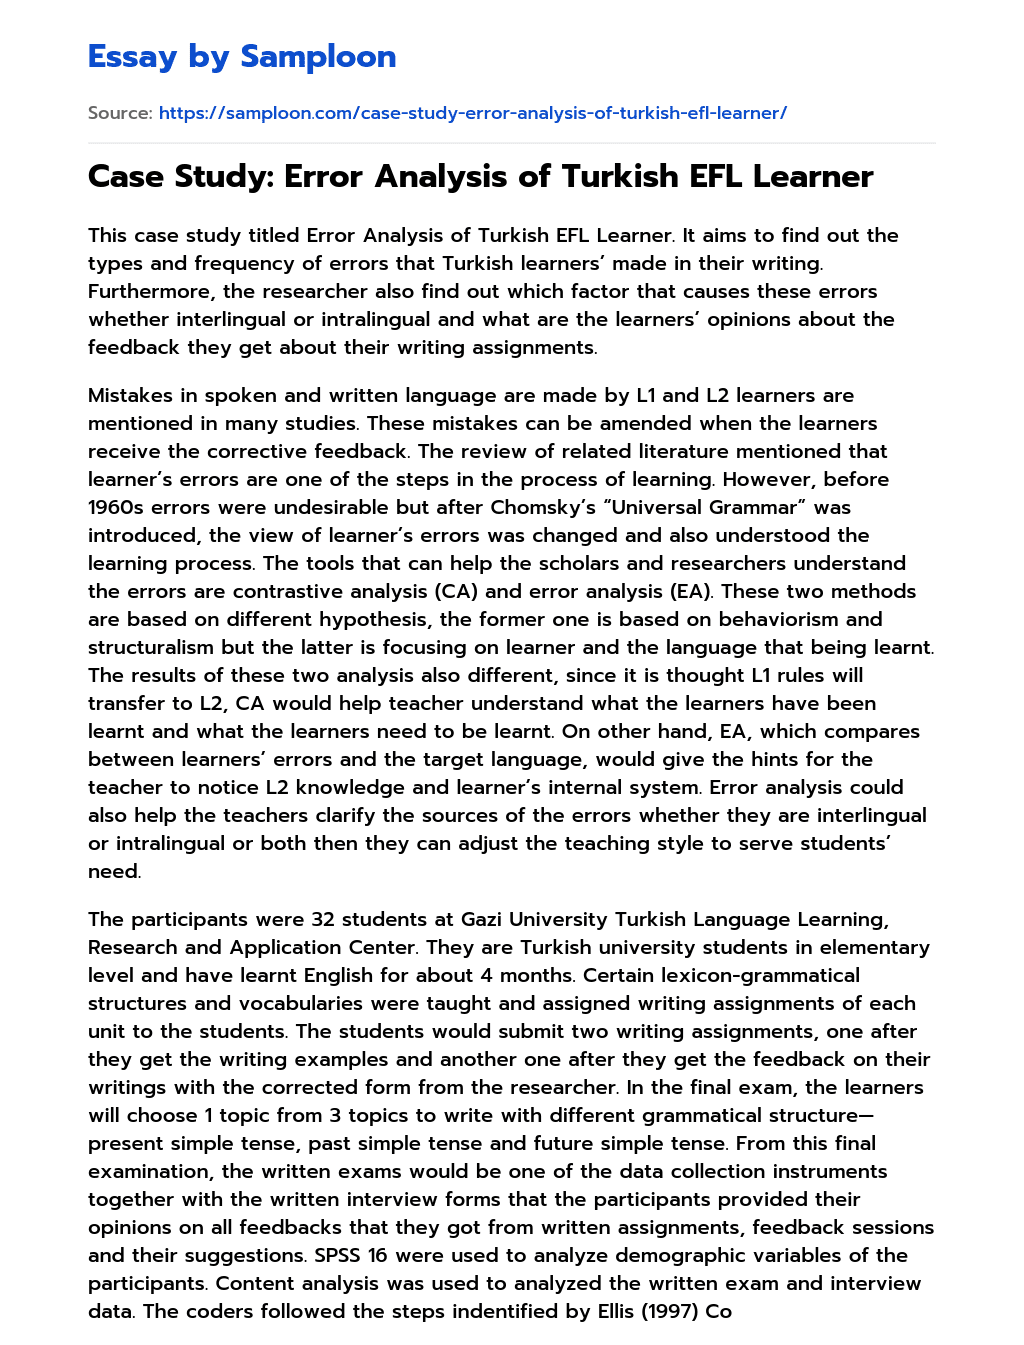 Case Study: Error Analysis of Turkish EFL Learner essay